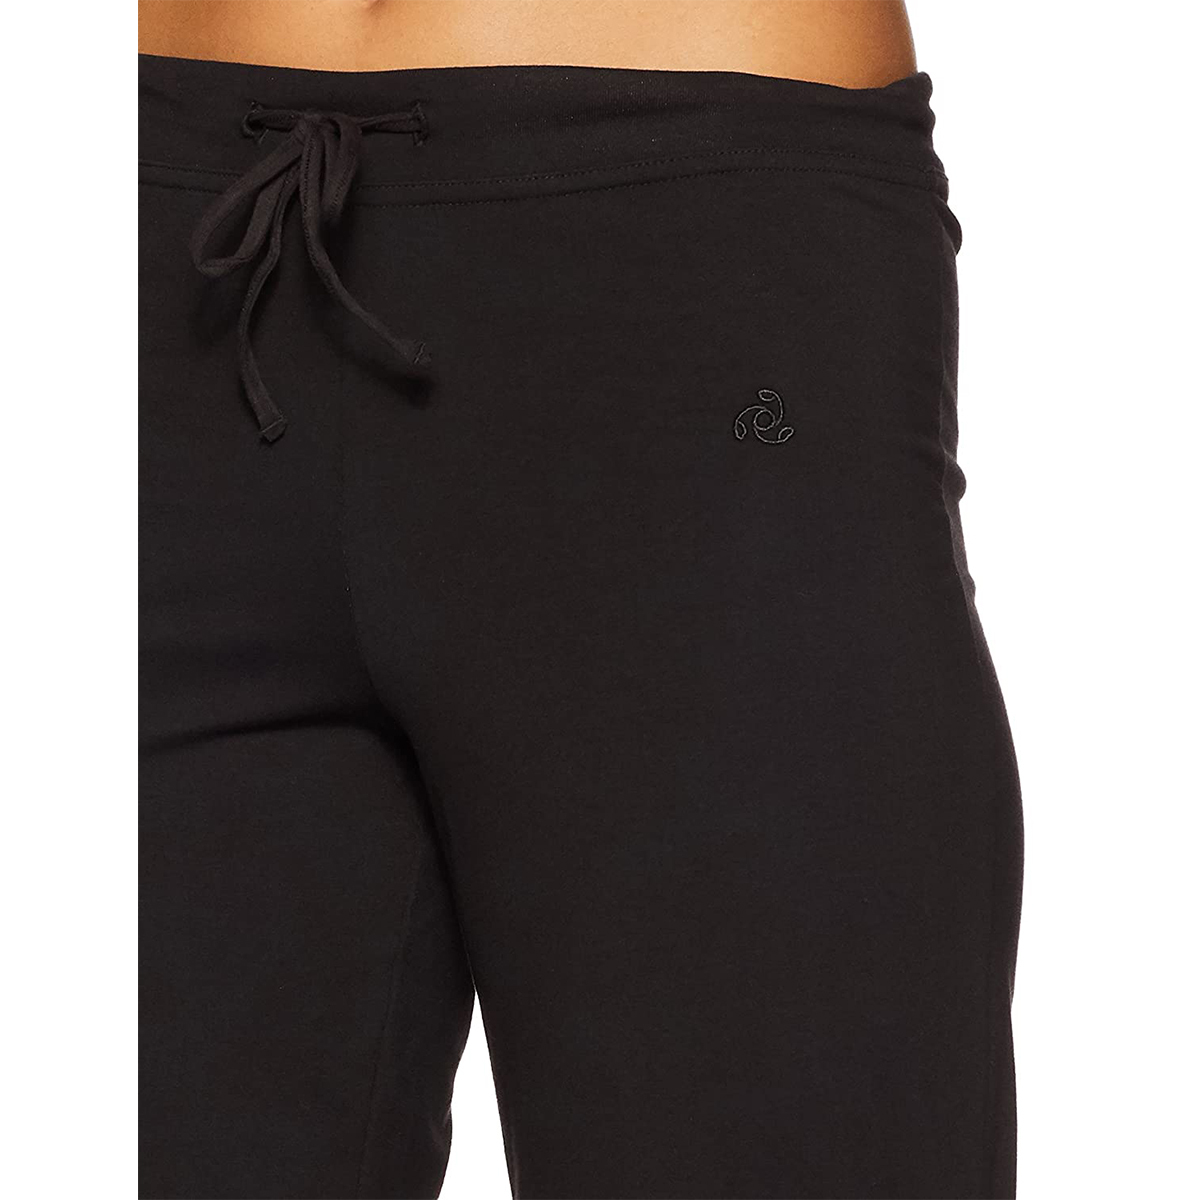 Jockey Regular Fit Lounge Pants - Black